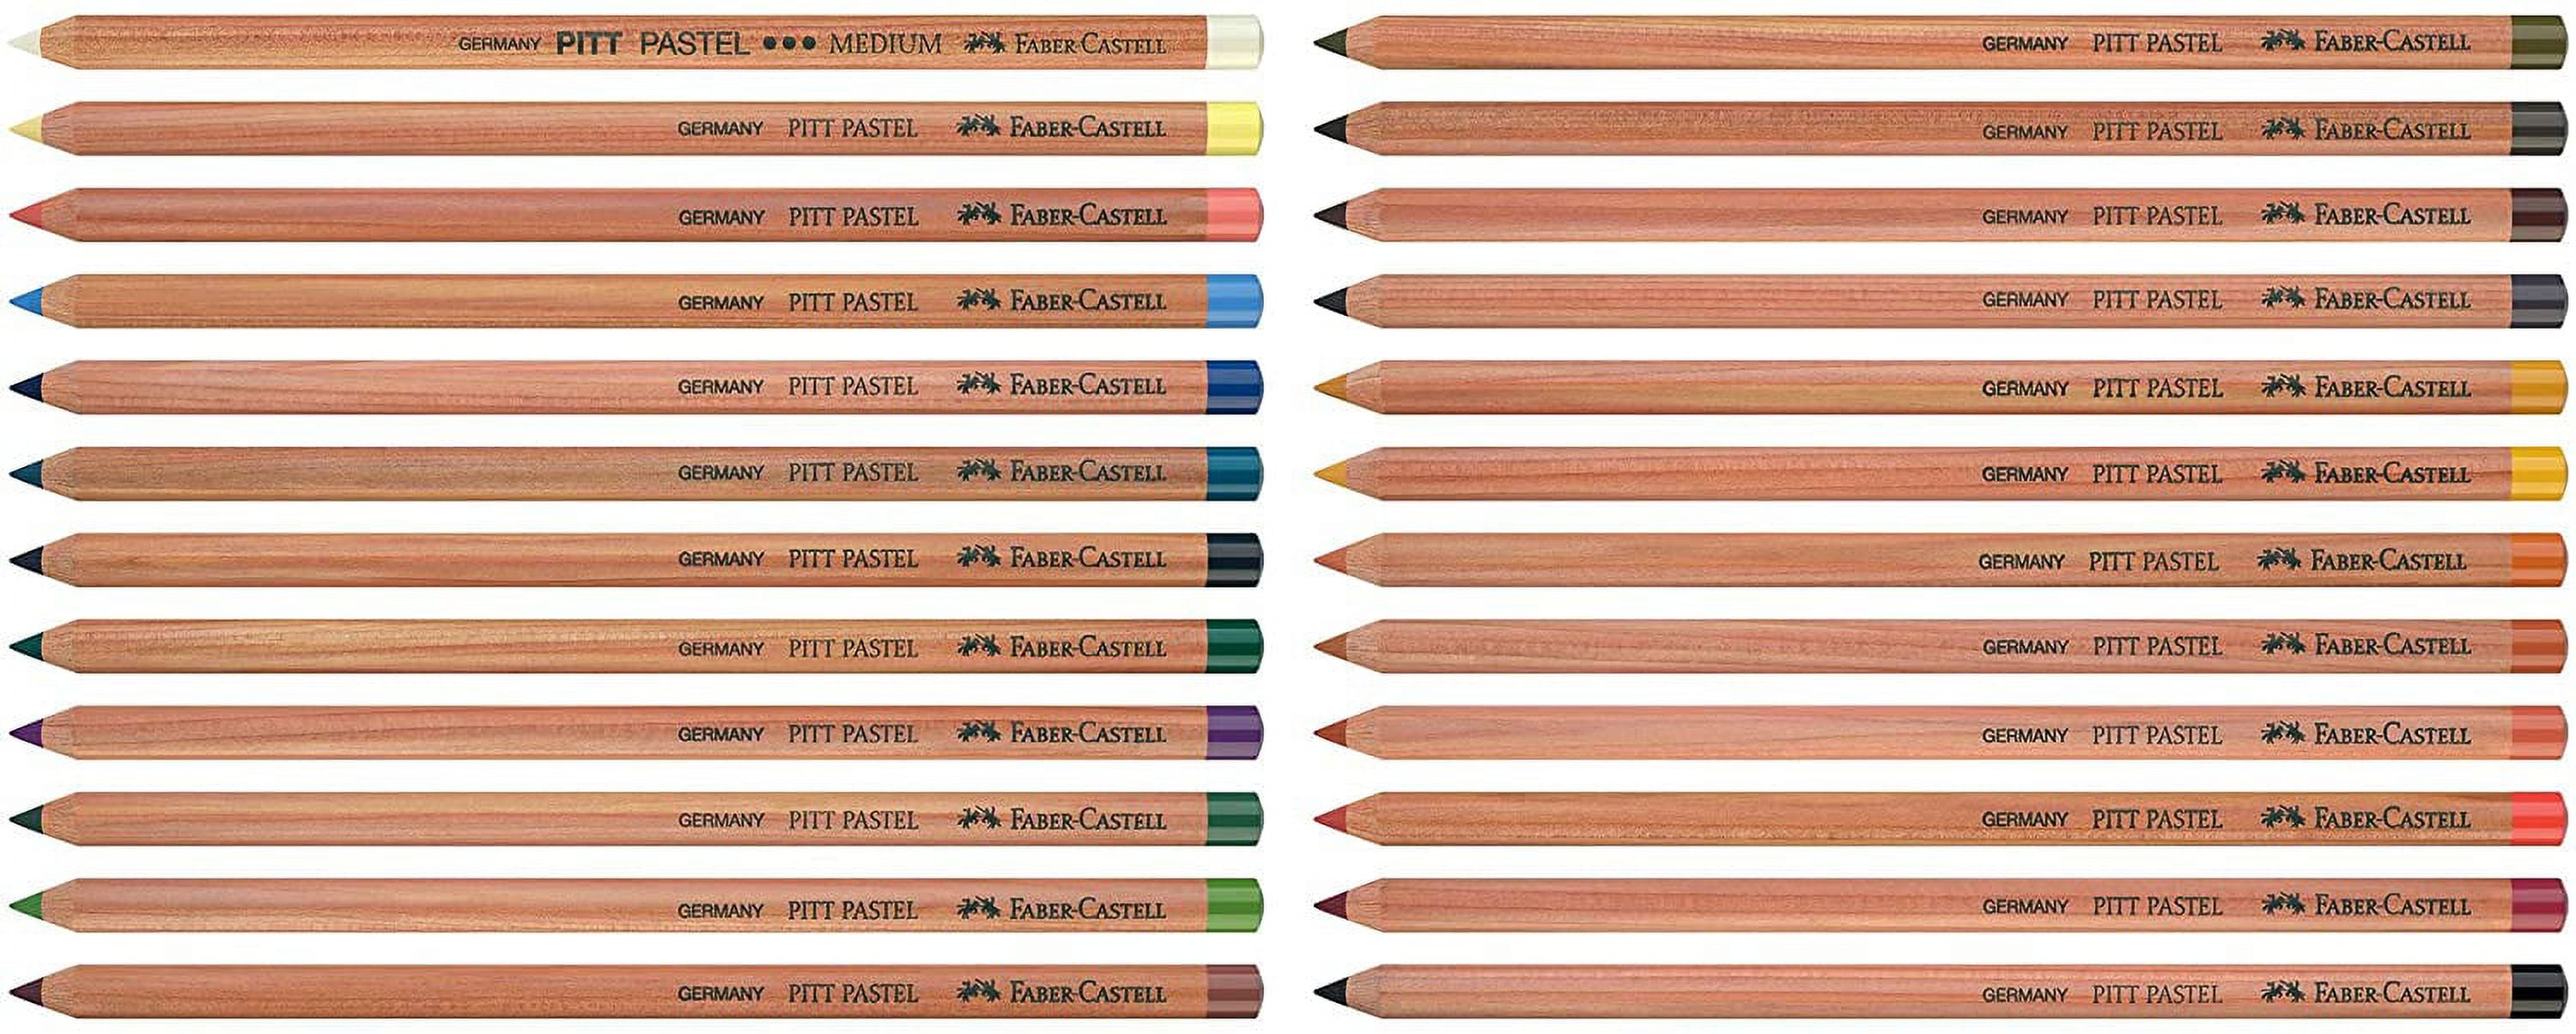 Faber Castell Pitt Pastel Pencil Set | Tin of 24